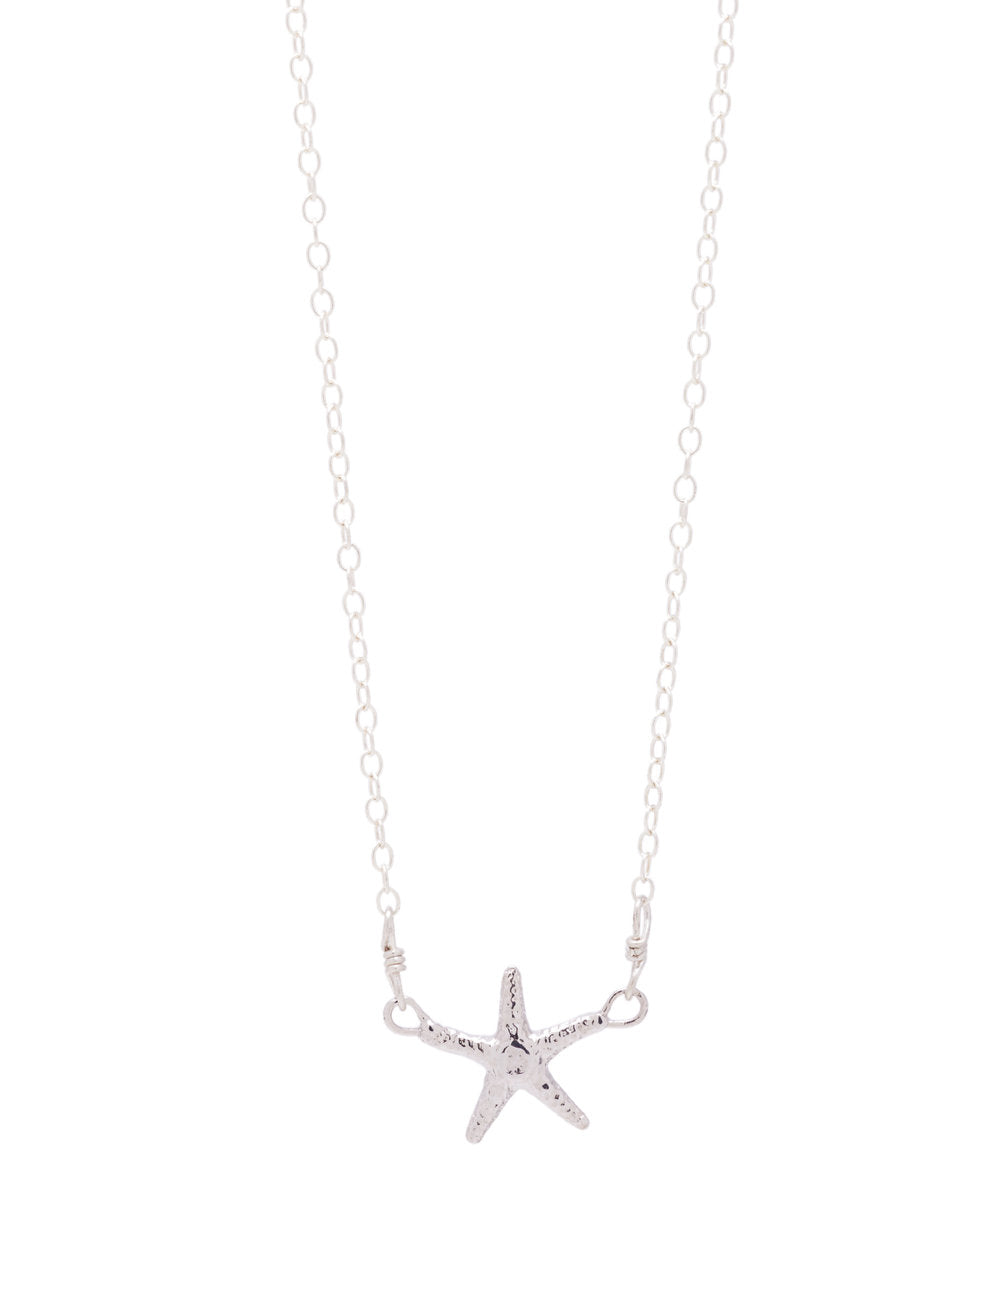 20% to Make-A-Wish Hawaii — Manini Starfish necklace